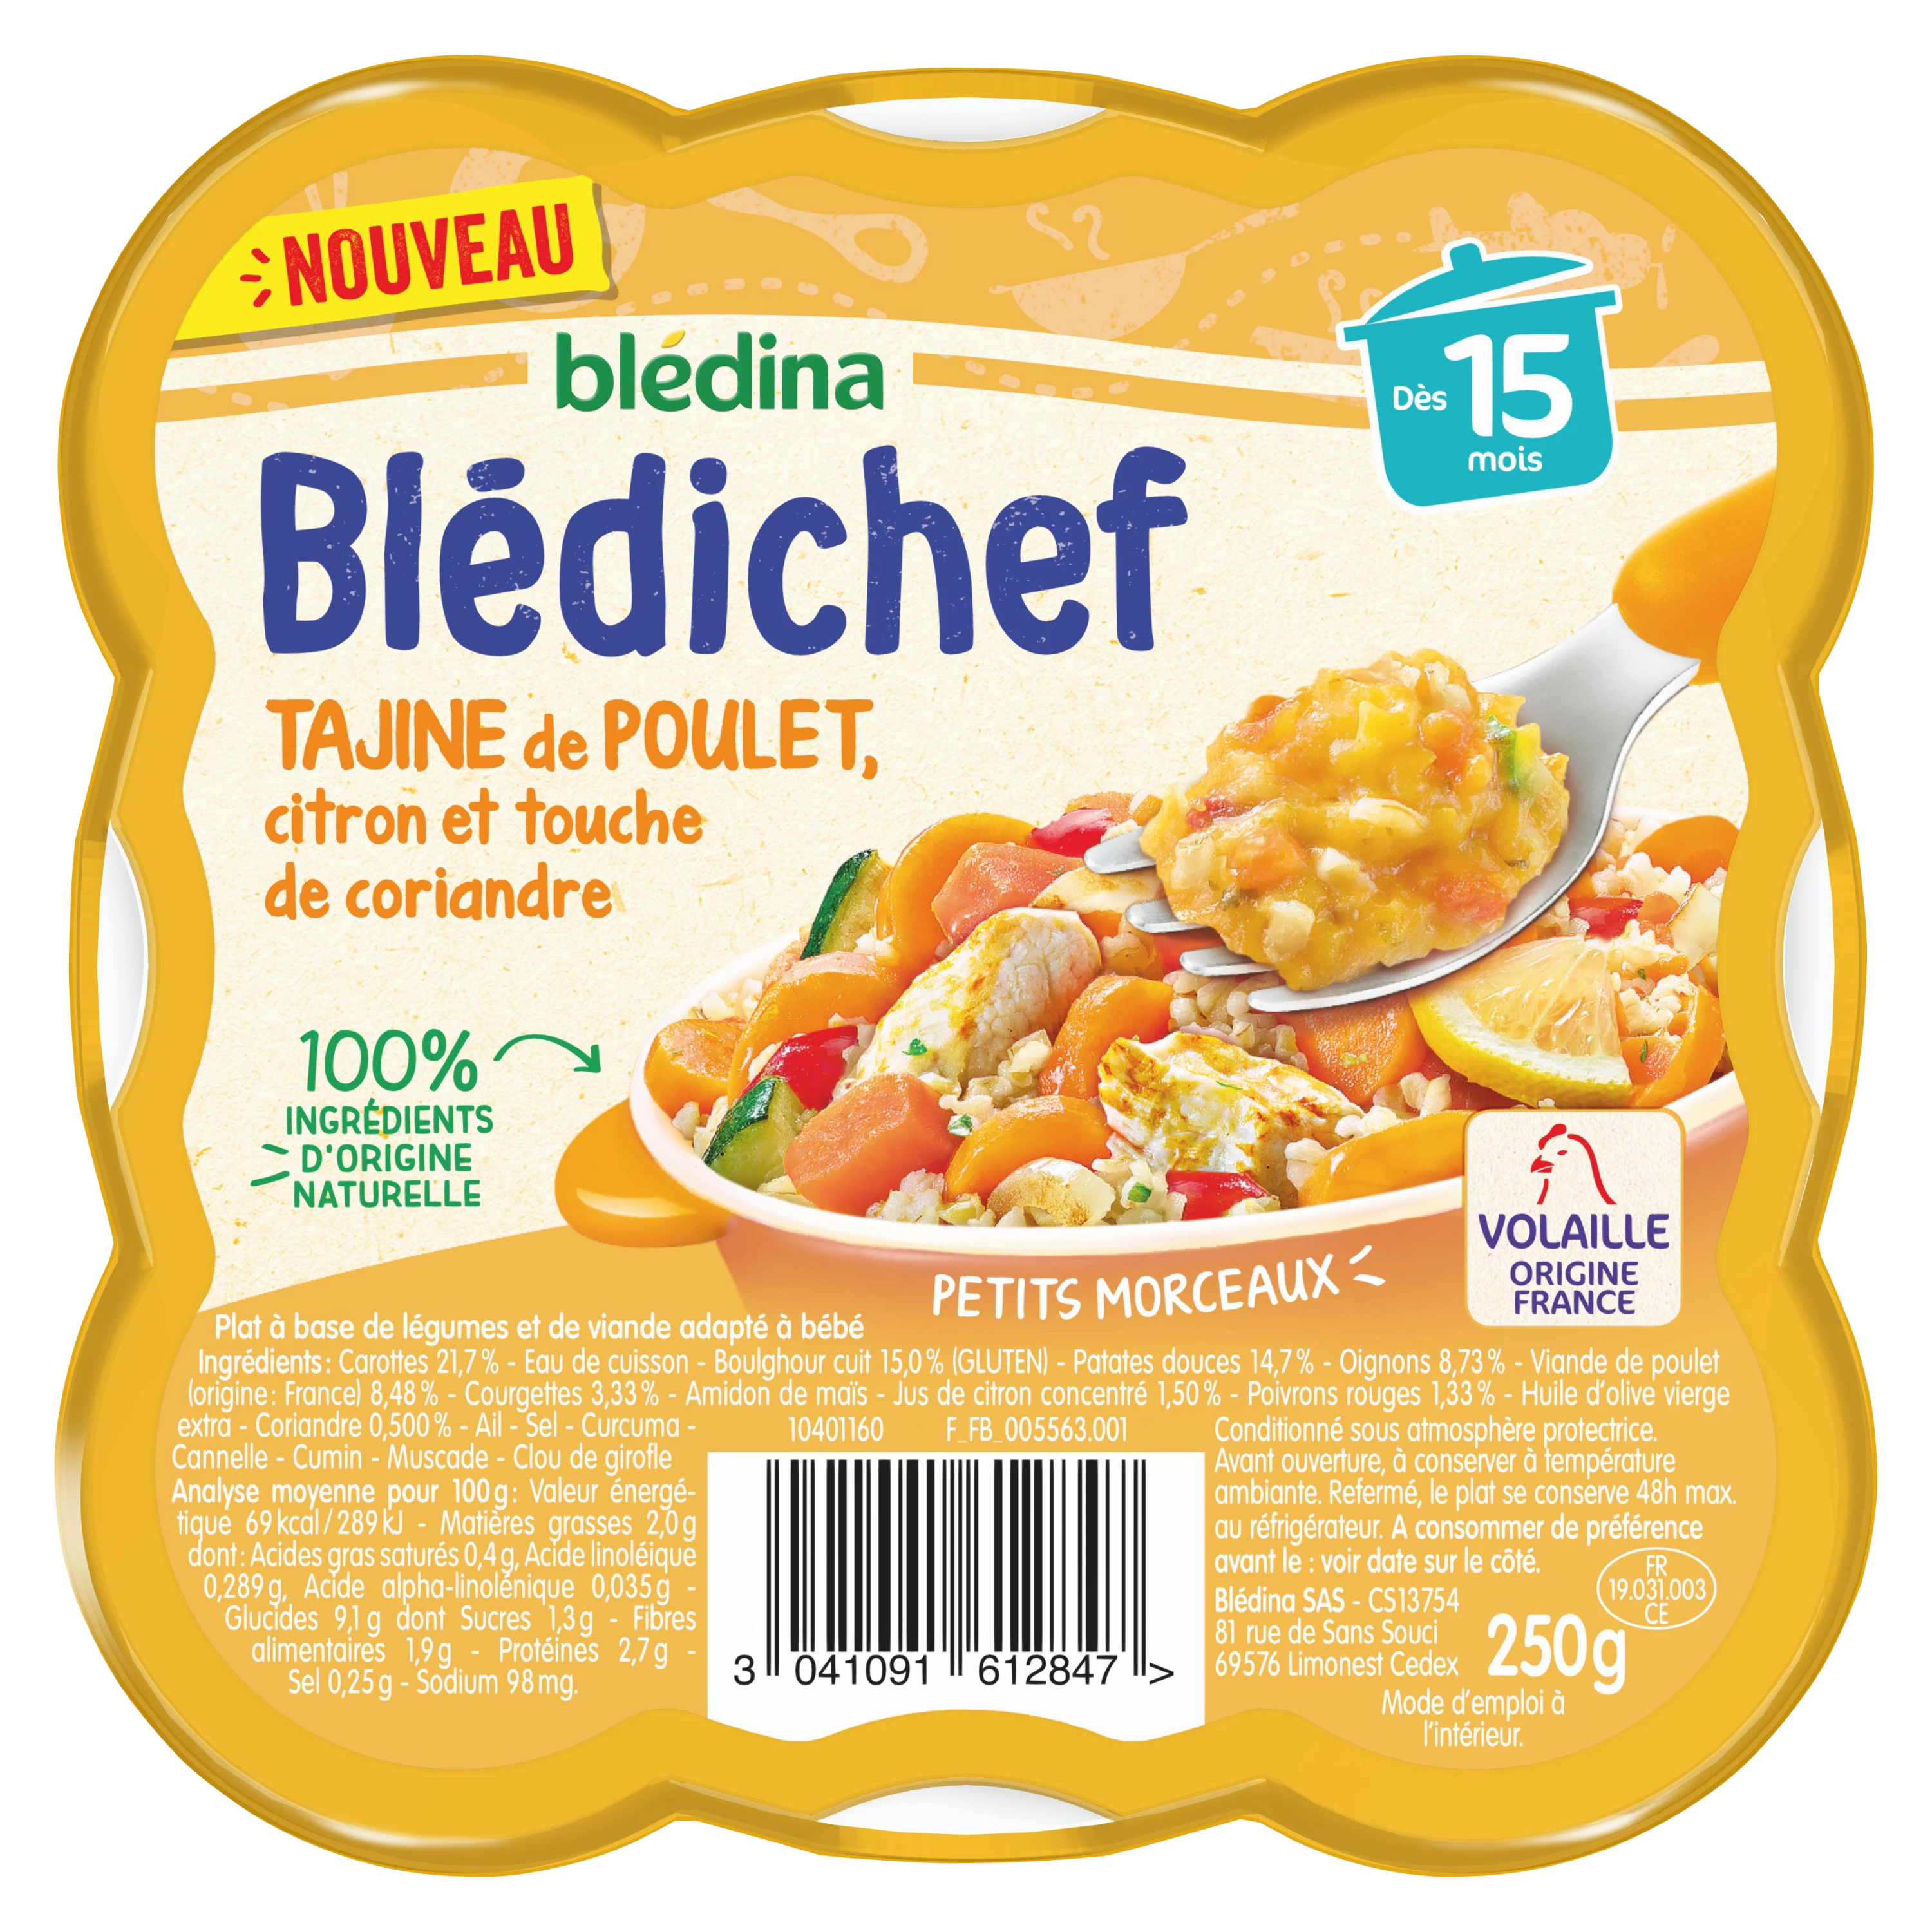 Blédichef 15 个月大婴儿菜肴，柠檬鸡塔吉锅加少许香菜 250 克 - BLEDINA